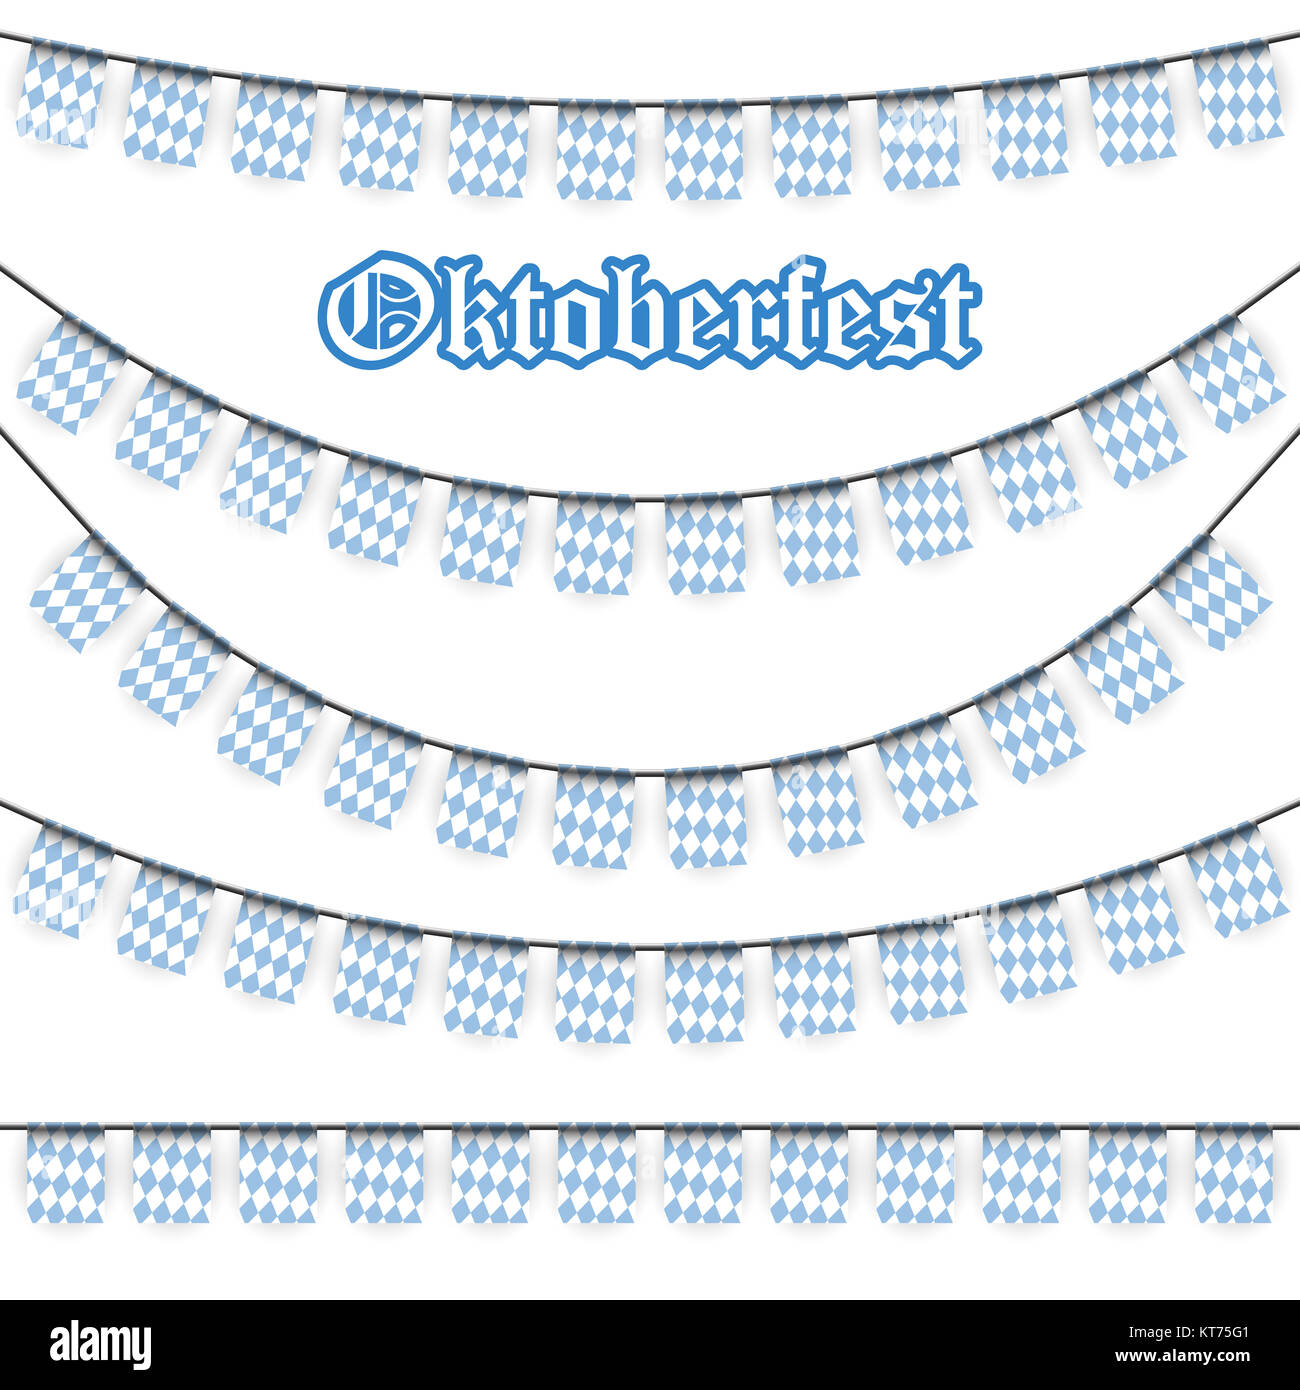 Oktoberfest garlands having blue-white checkered pattern and text Oktoberfest Stock Photo